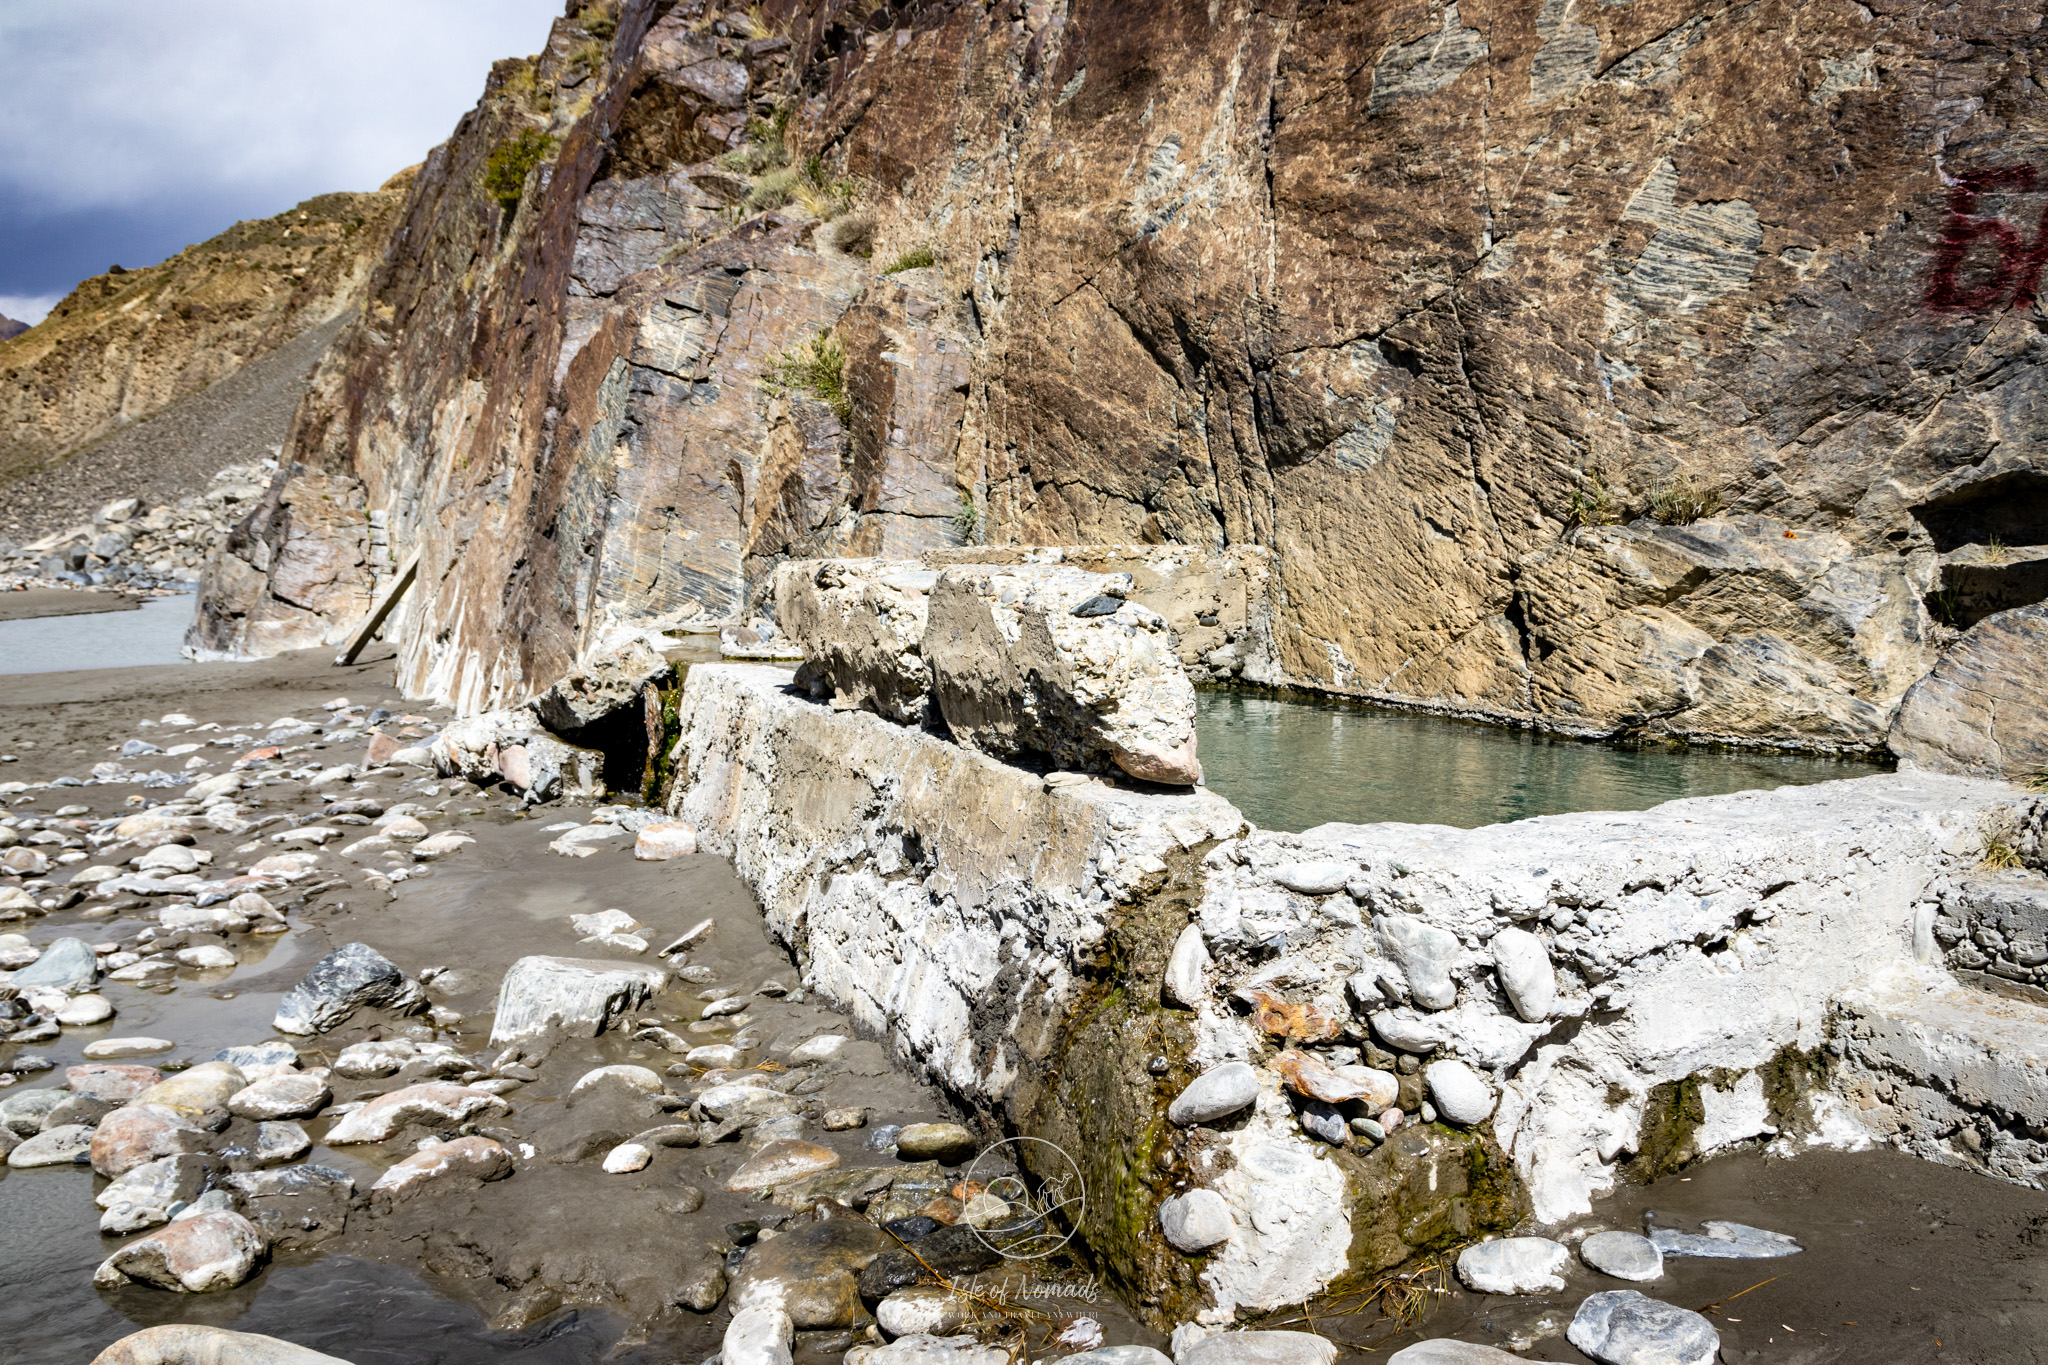 A view of the Kara-Tash hot springs